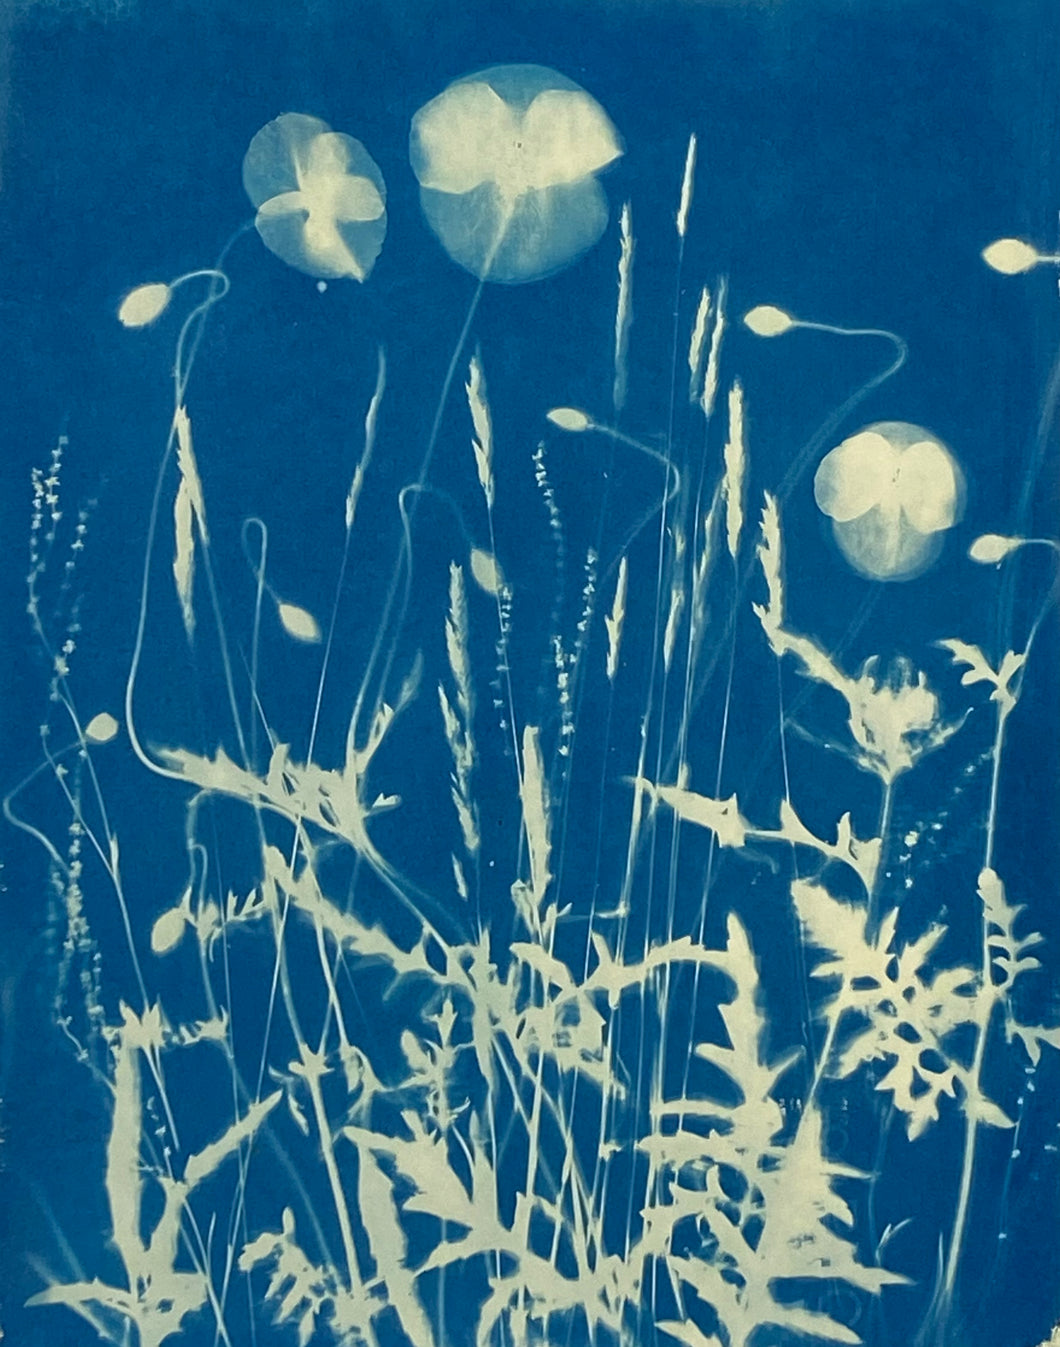 'Wild Poppies' Cyanotype Photogram